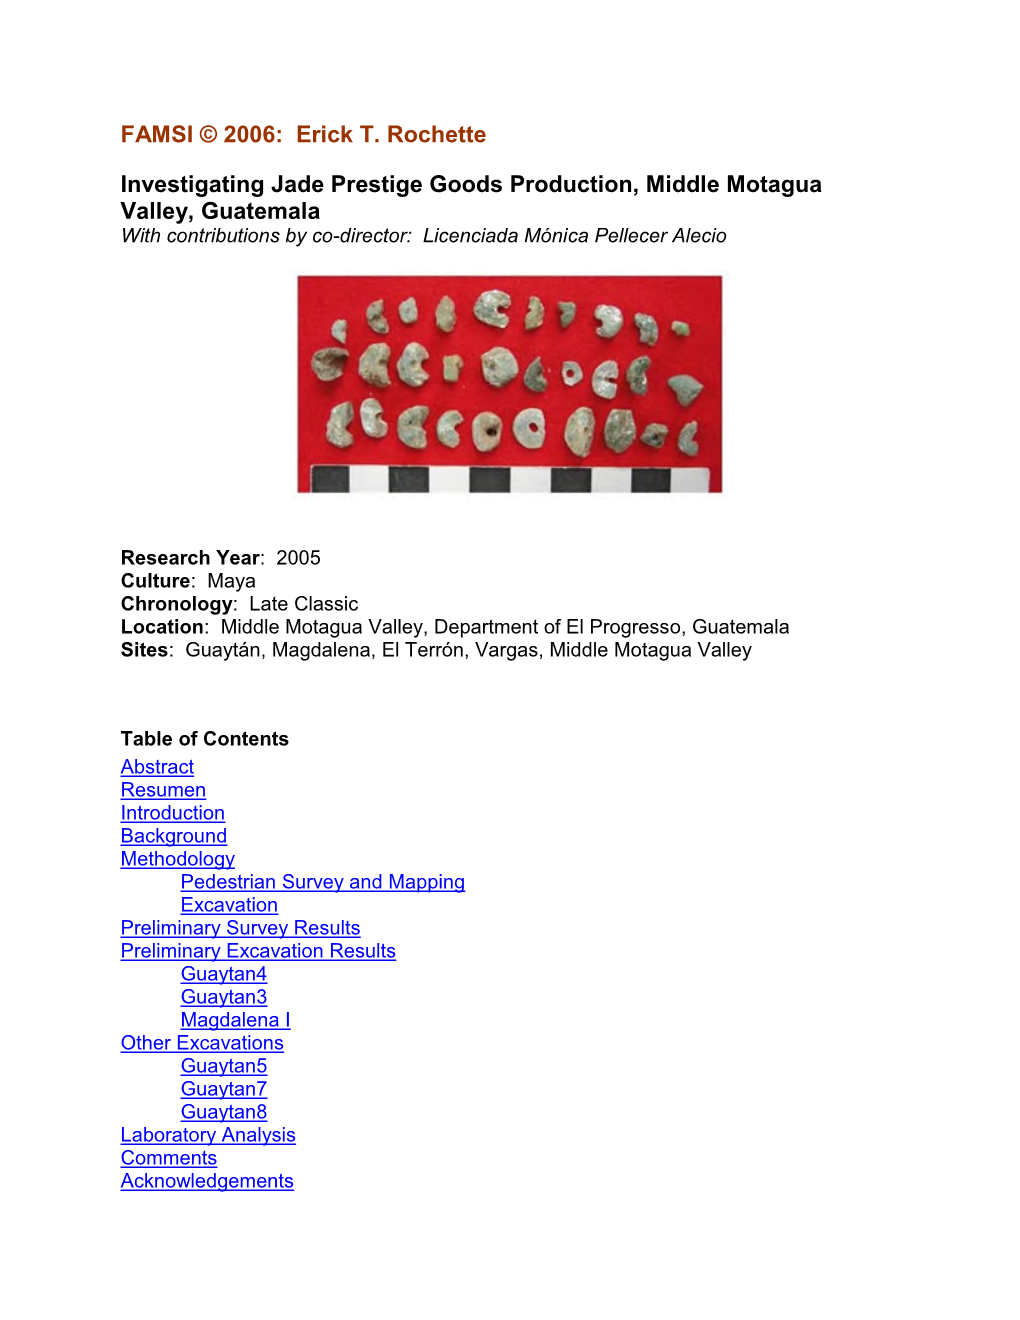 Investigating Jade Prestige Goods Production, Middle Motagua Valley, Guatemala with Contributions by Co-Director: Licenciada Mónica Pellecer Alecio